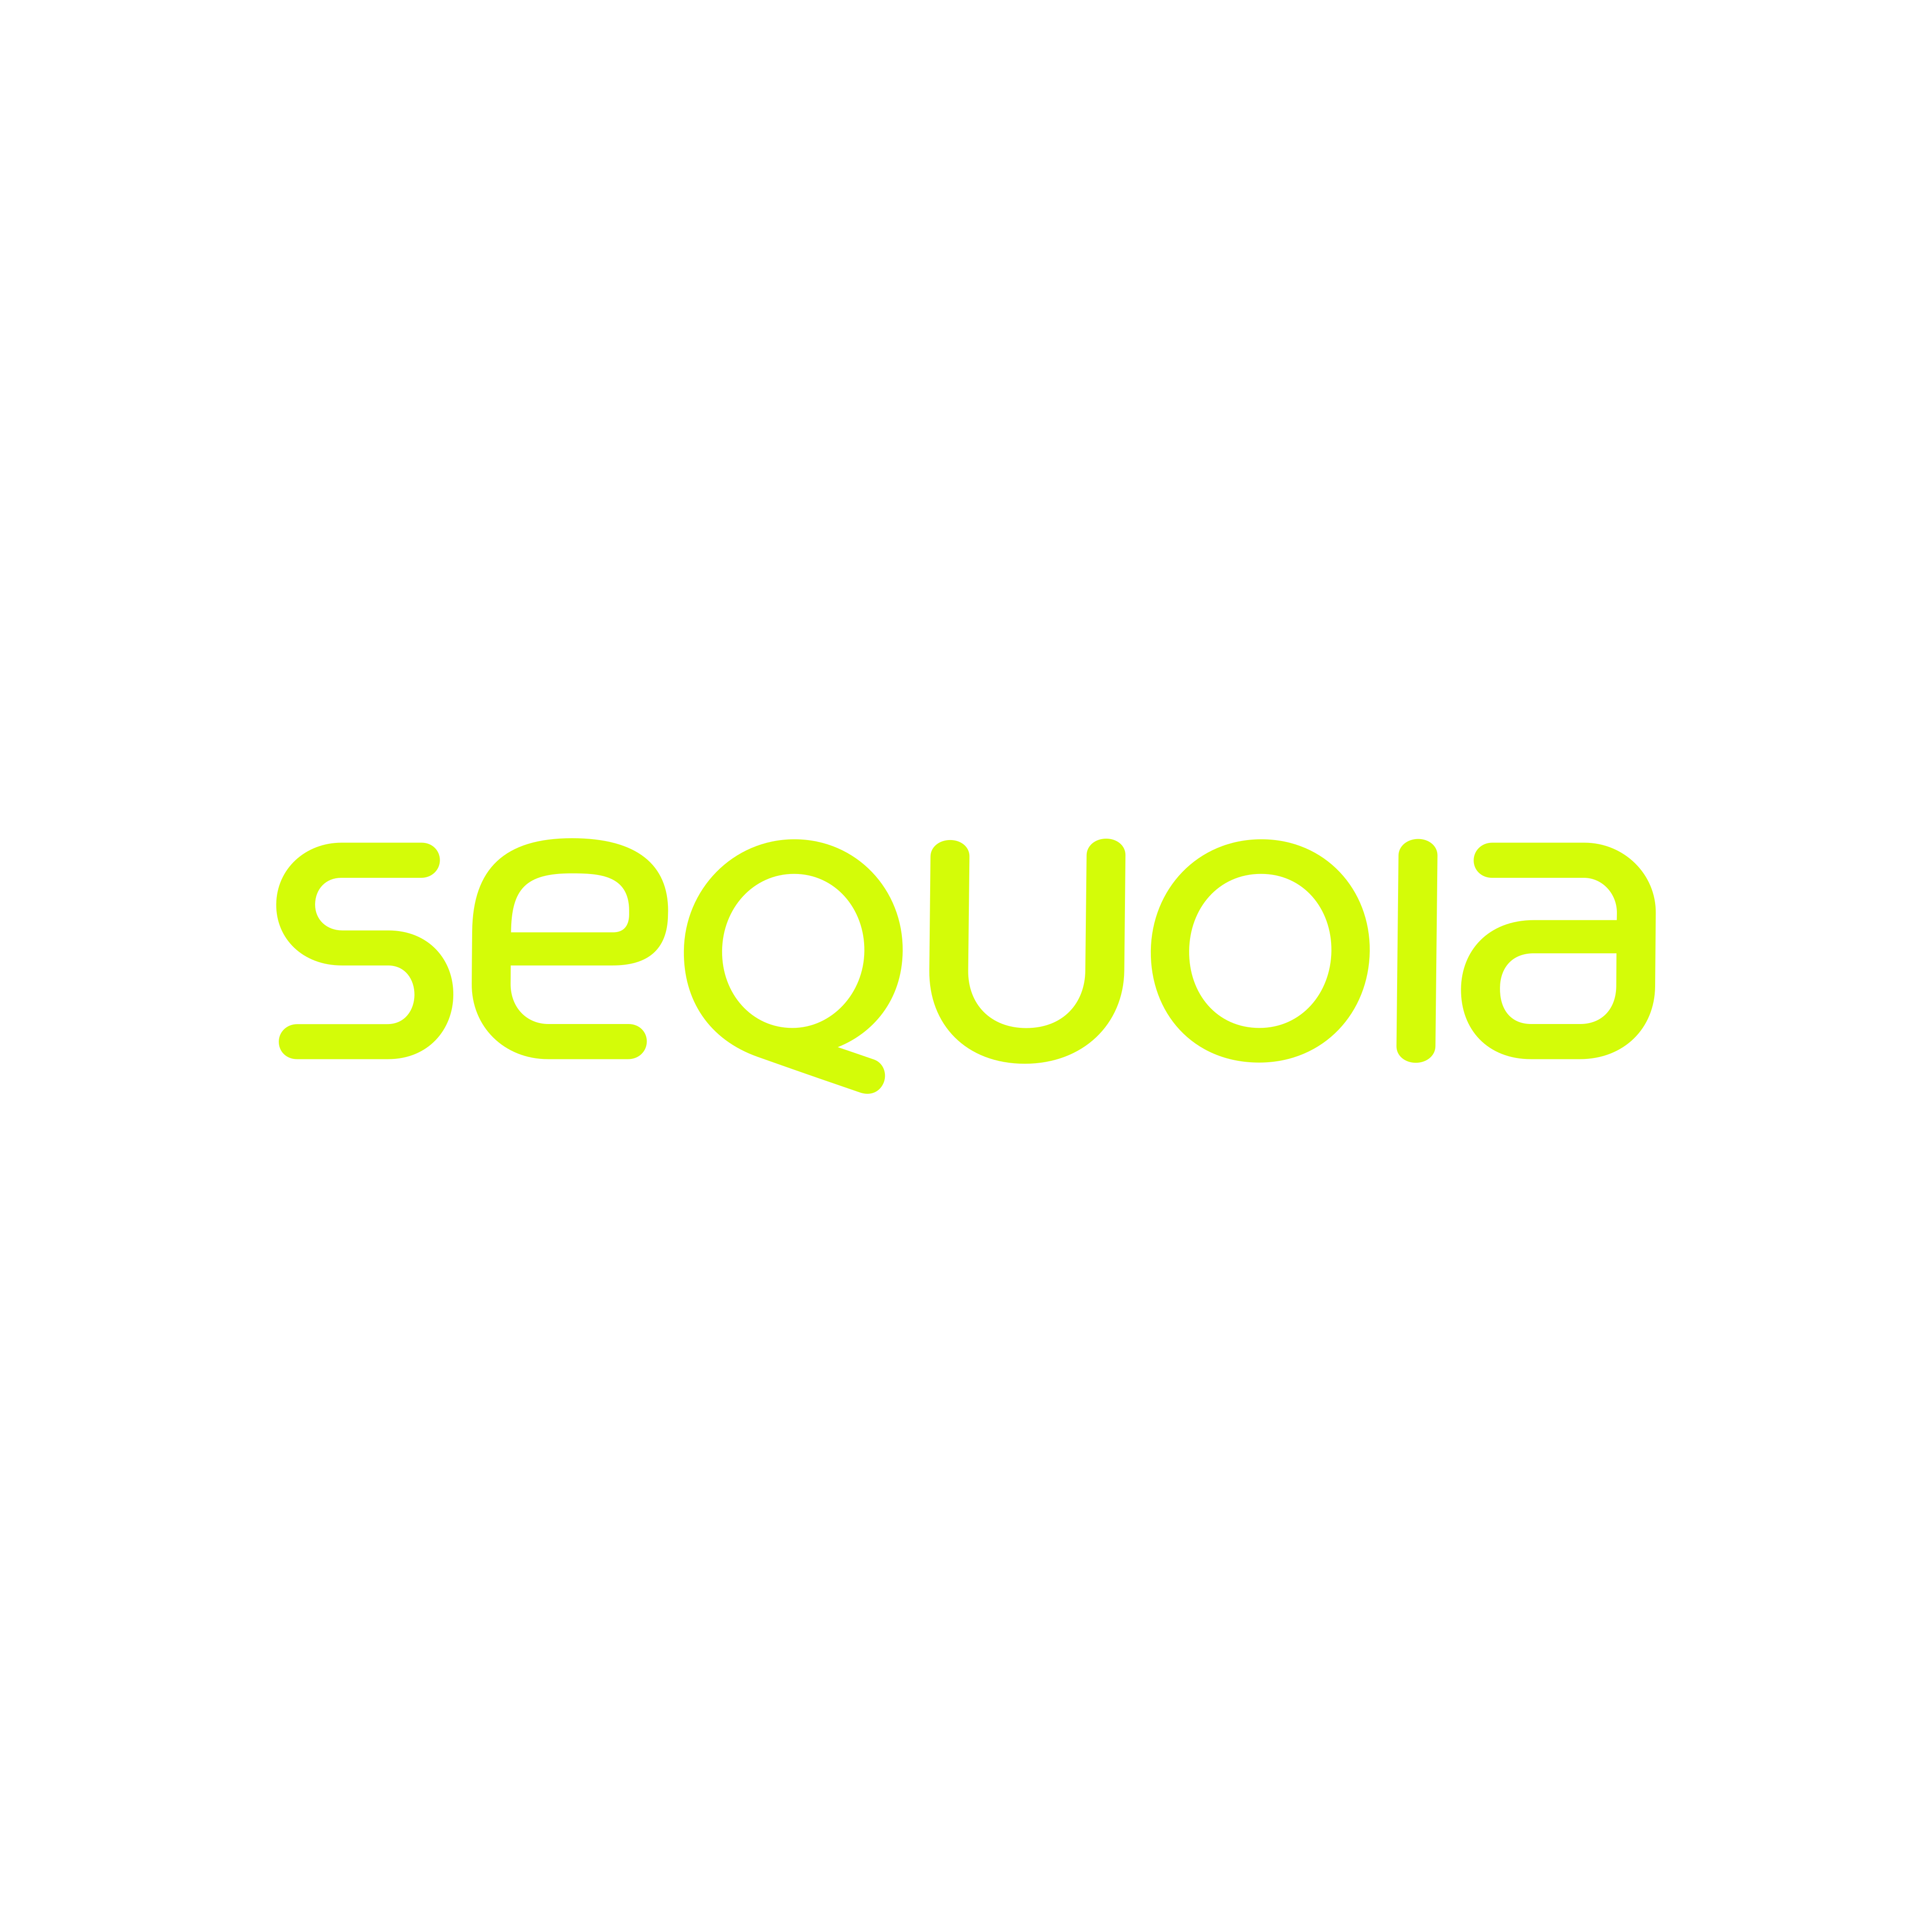 Sequoia Logo PNG.